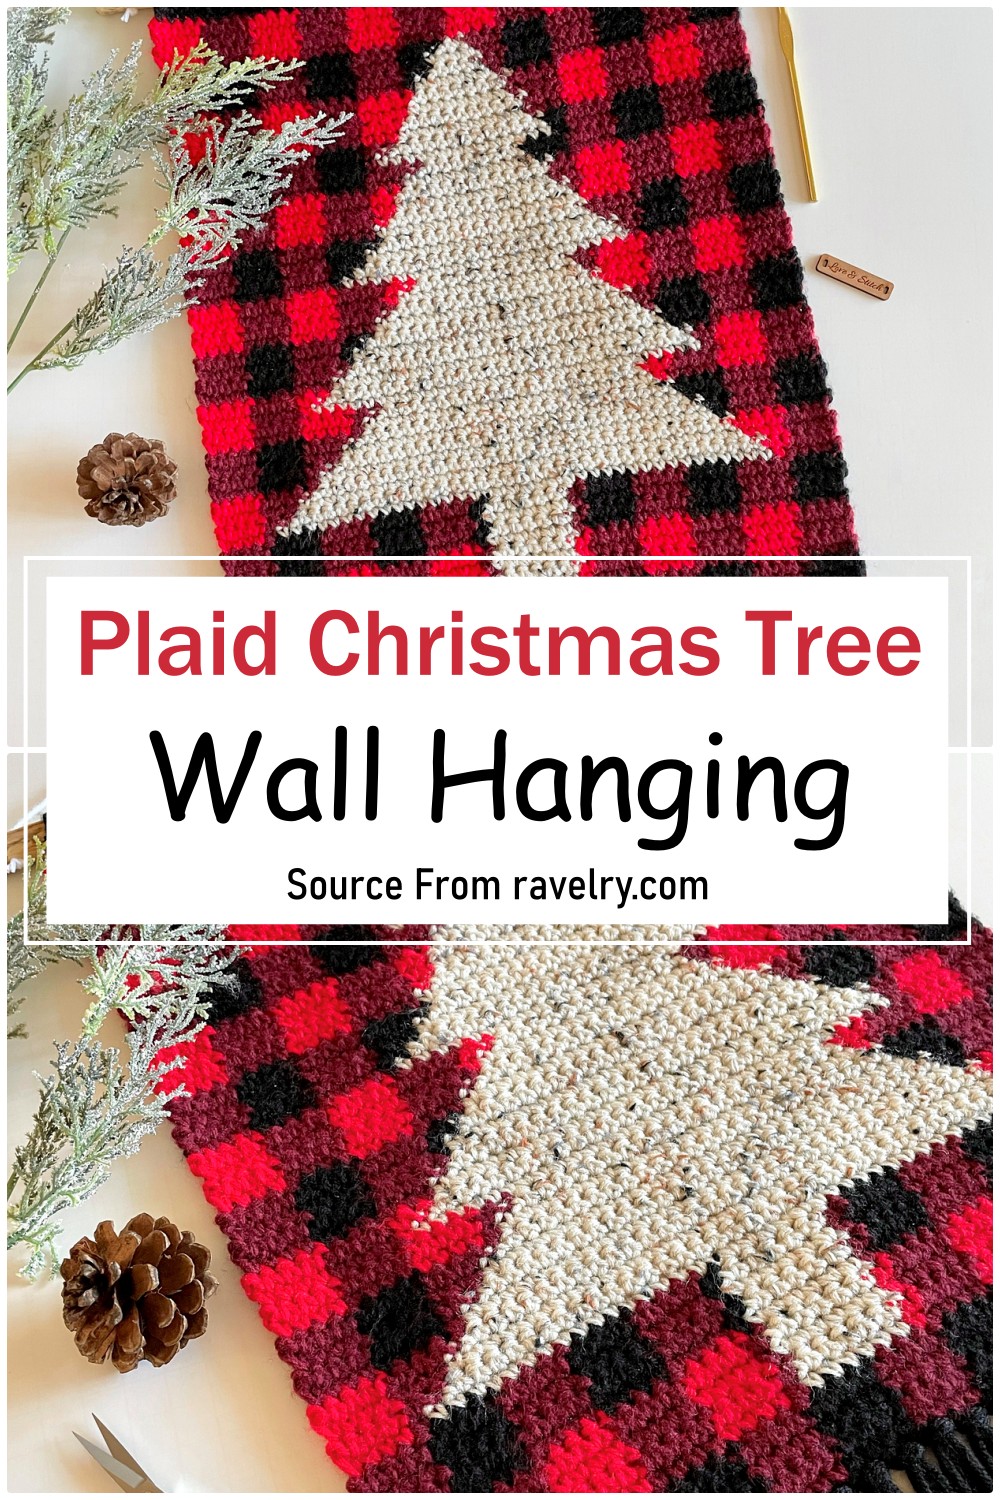 Plaid Christmas Tree Wall Hanging